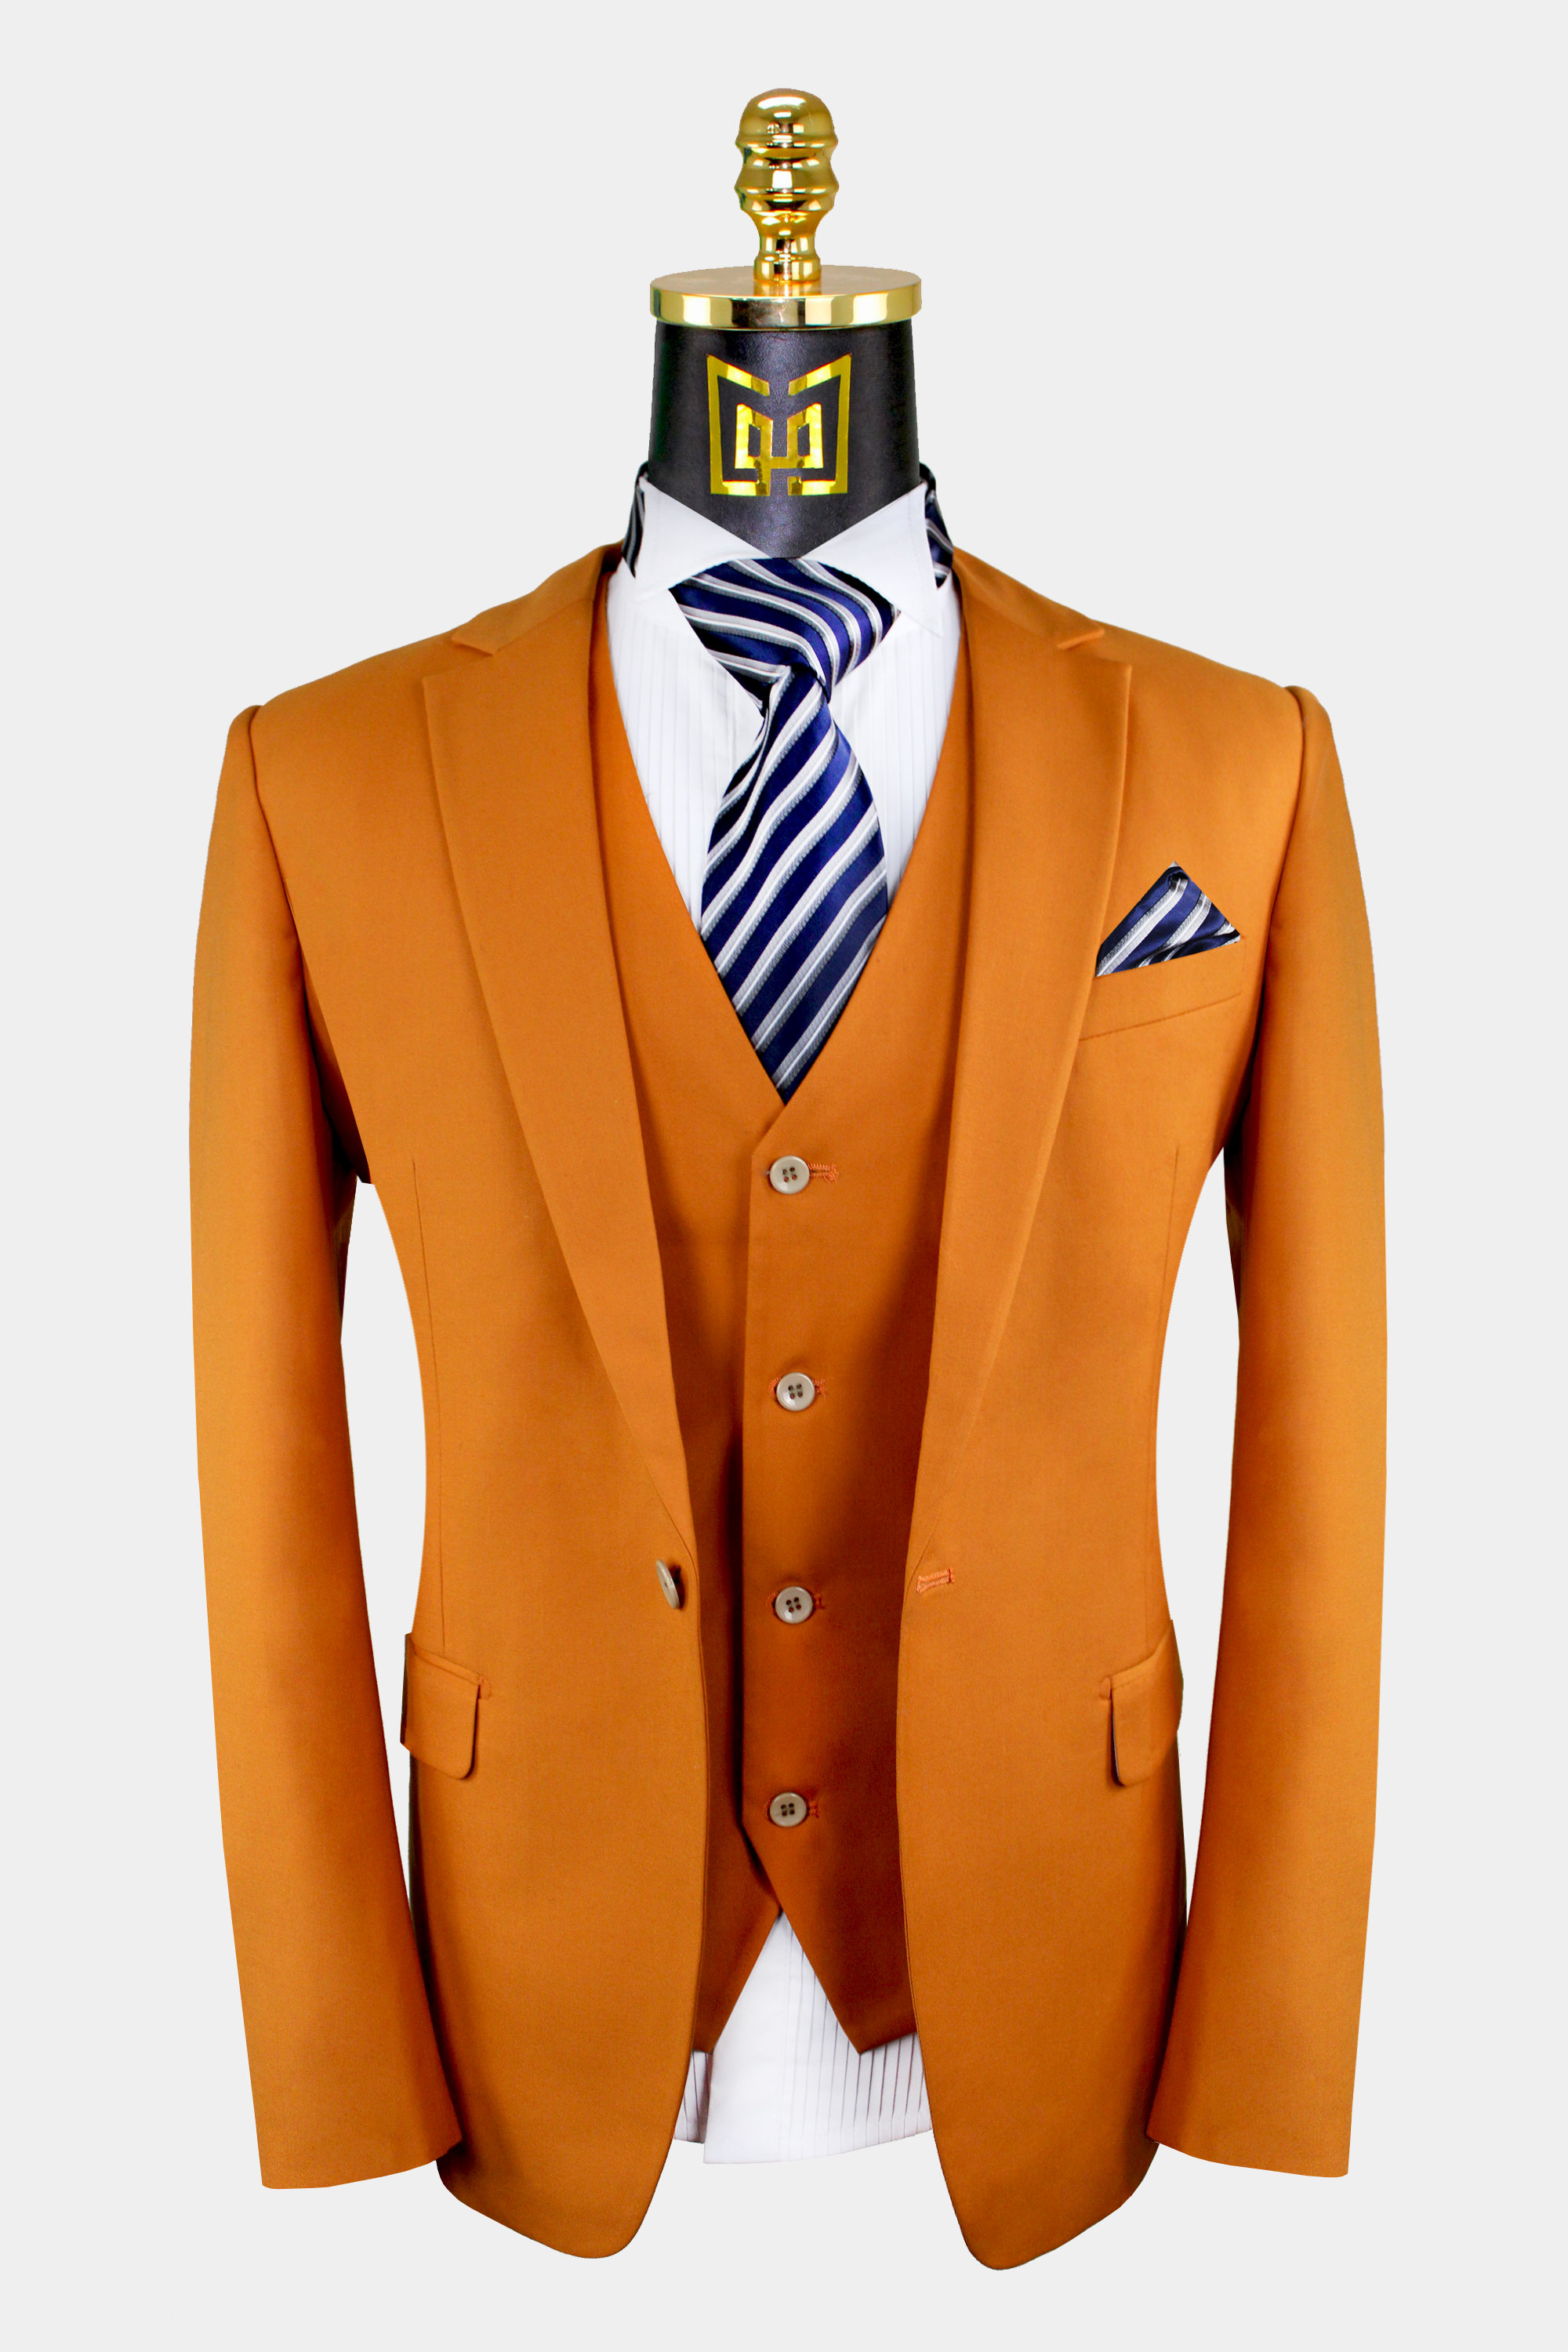 Burnt Orange Suit - 3 Piece